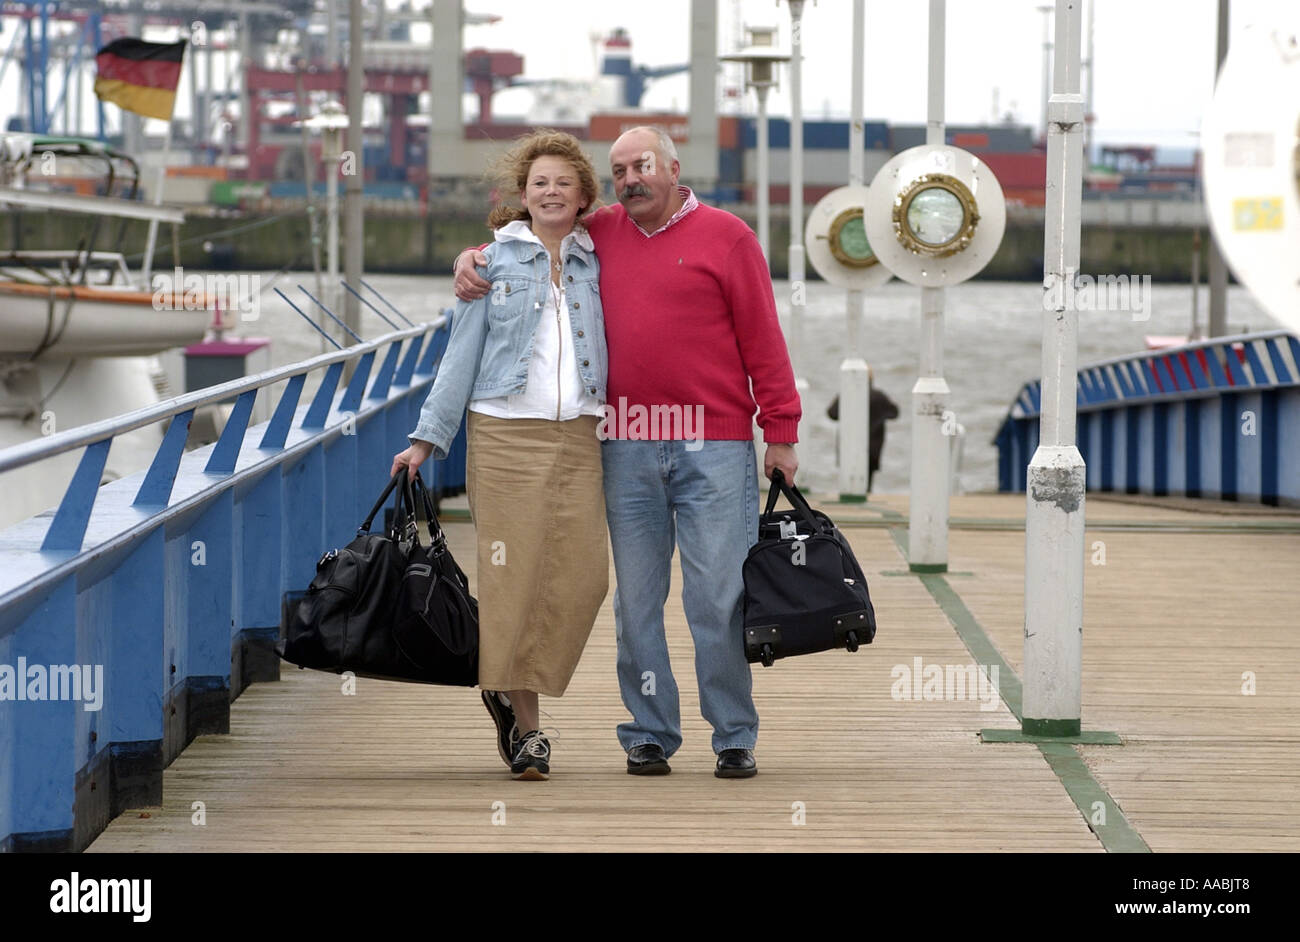 Travelling senior citizens Stock Photo